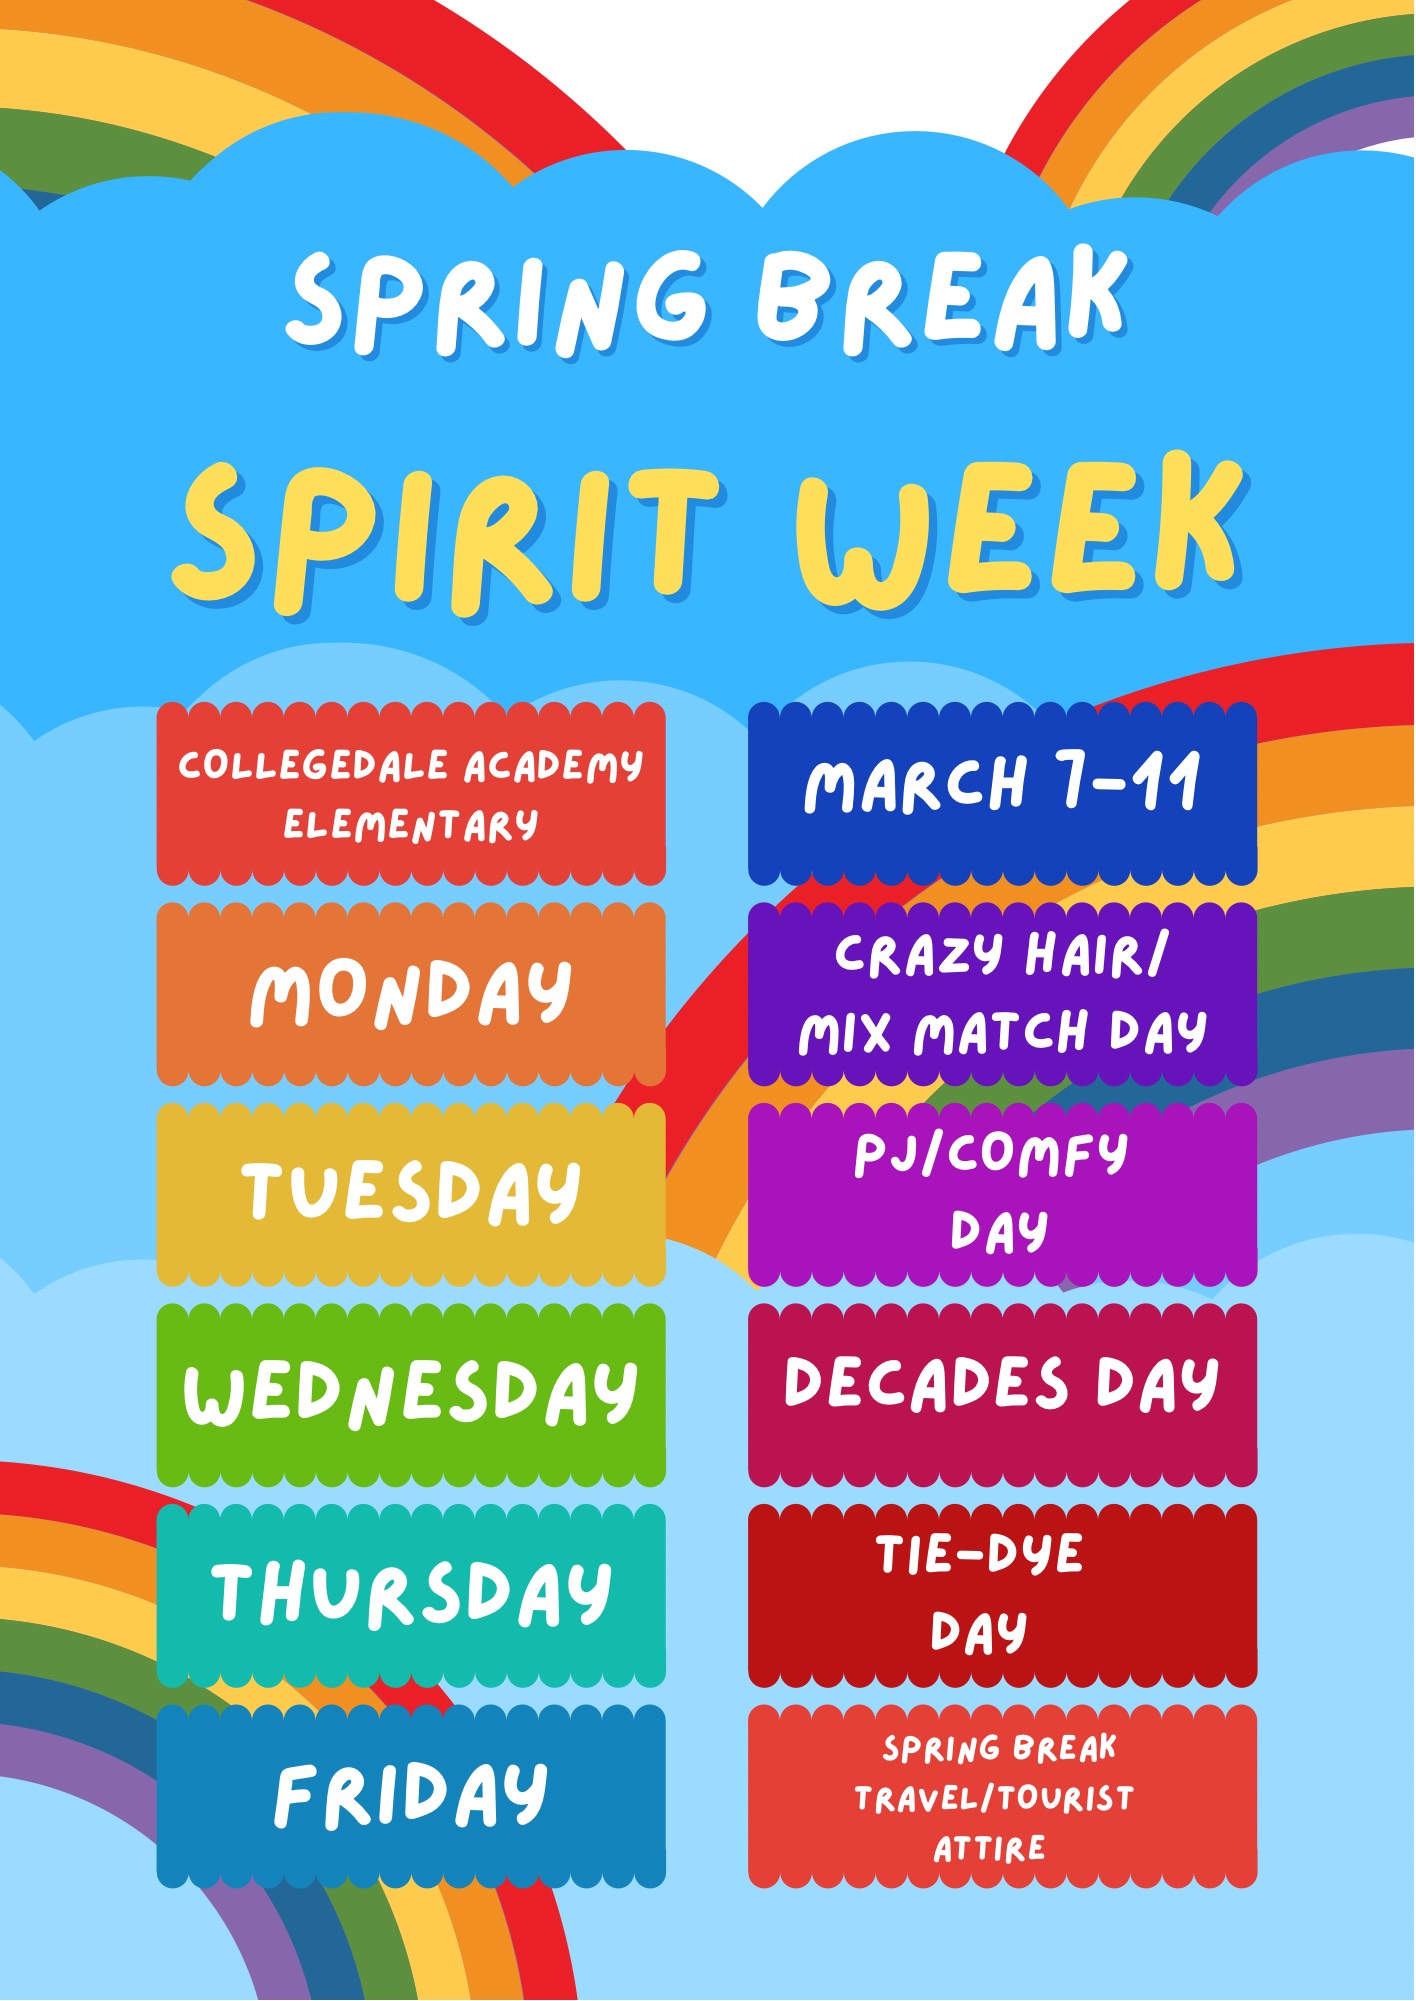 Spring Break Spirit Week - Collegedale Academy